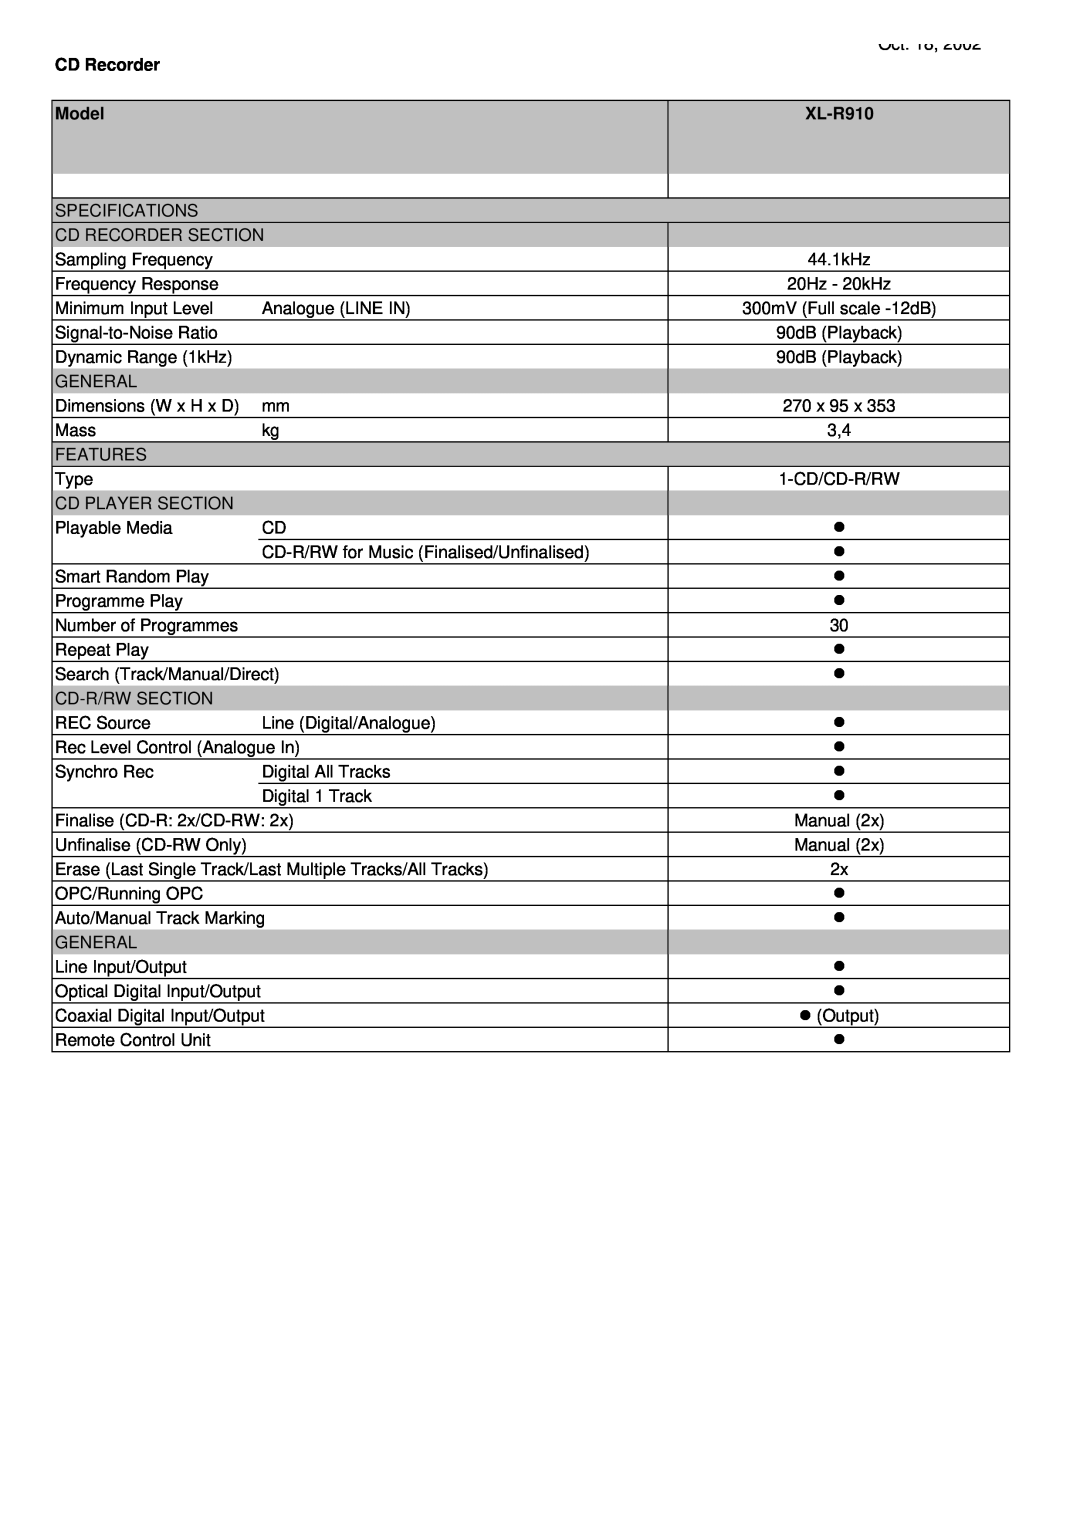 JVC XL-R910 specifications CD Recorder, Model 